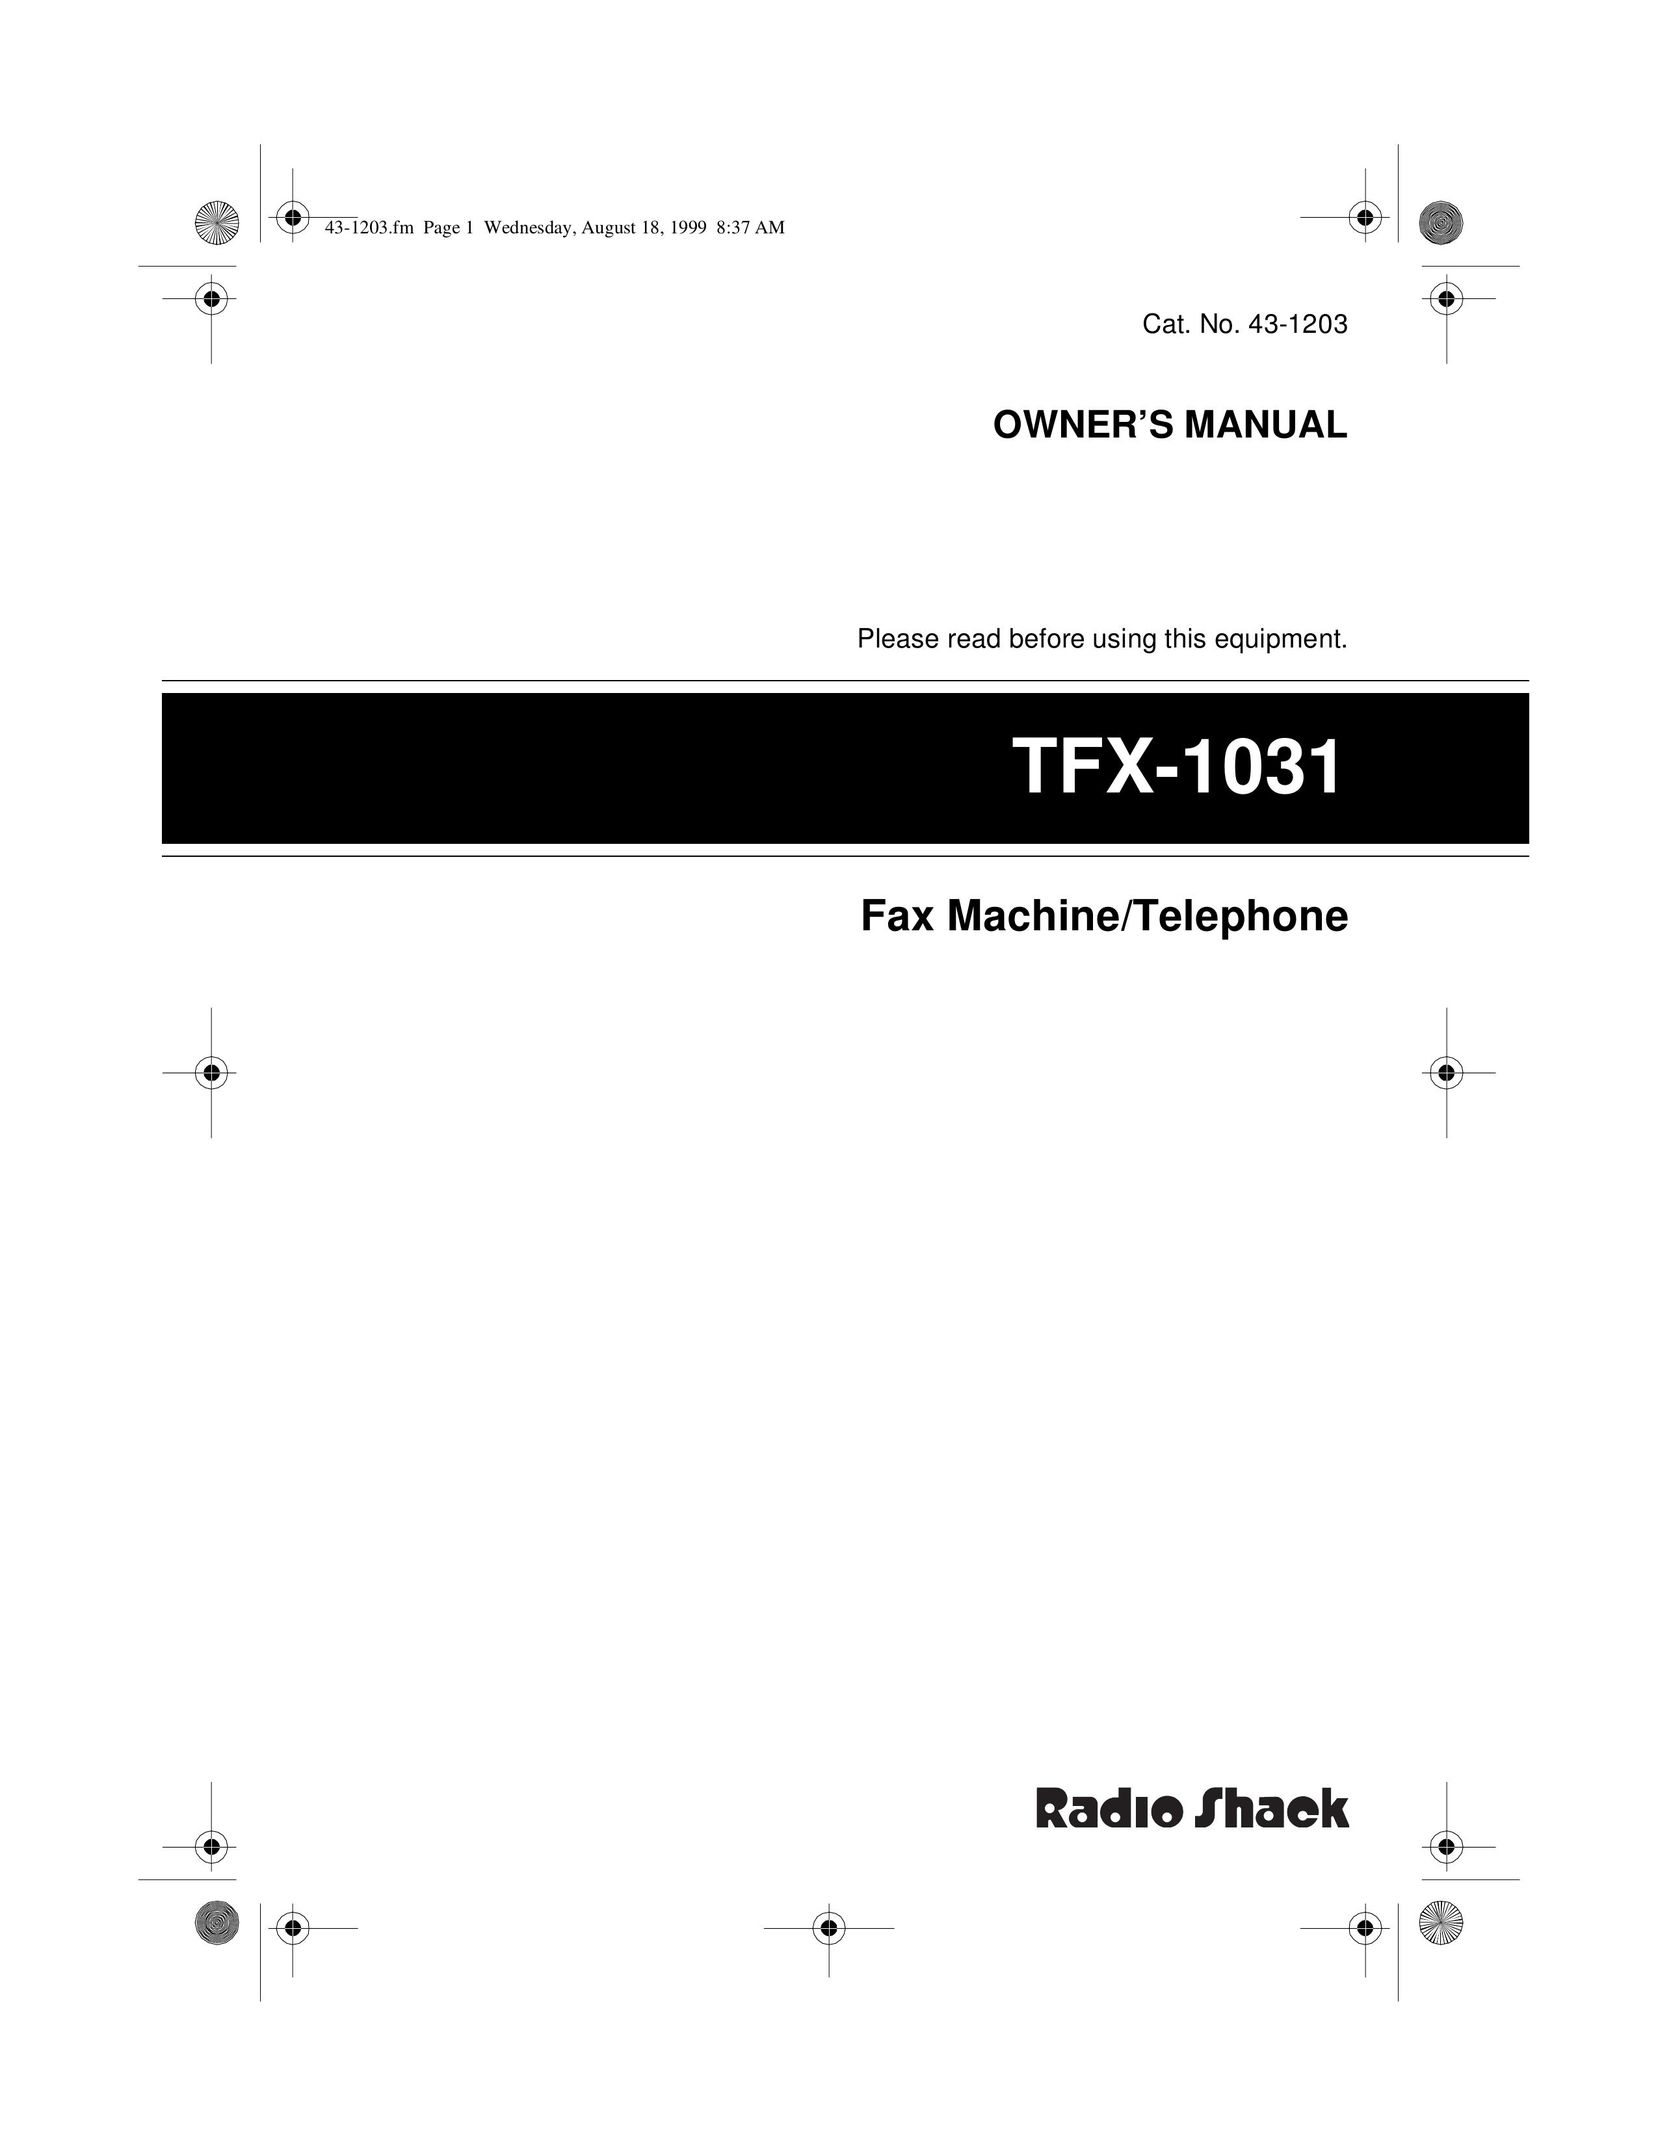 Radio Shack TFX-1031 Fax Machine User Manual